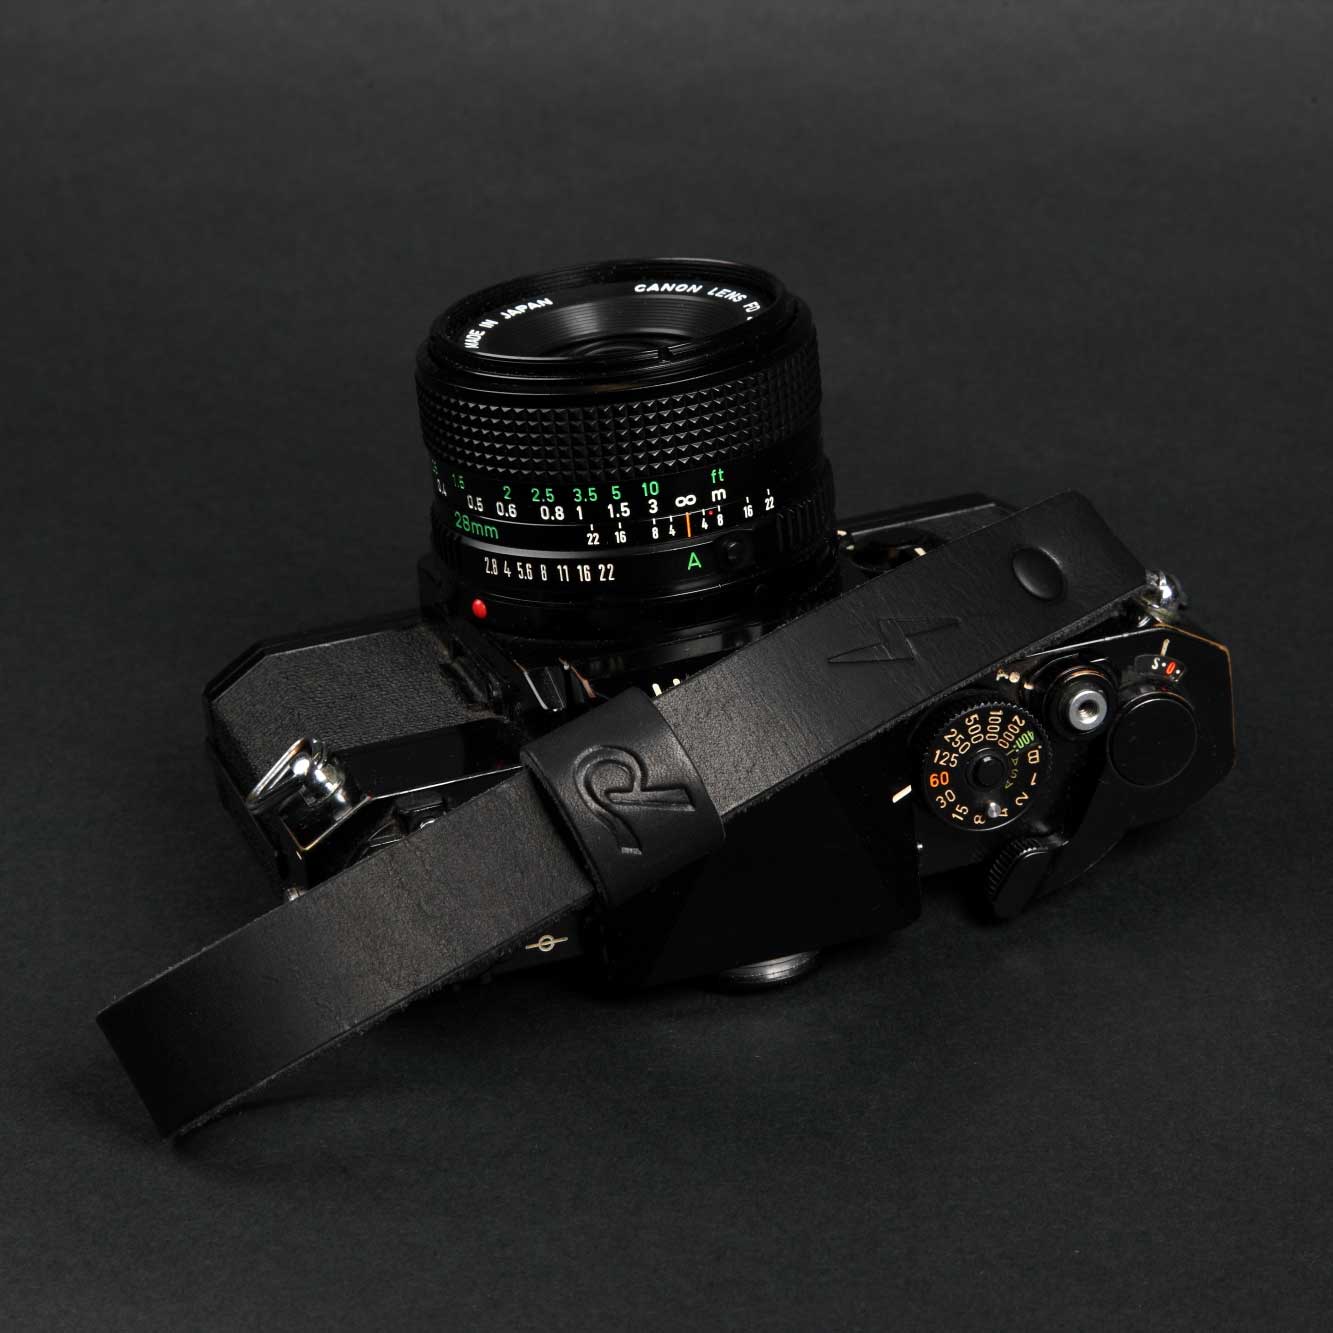 Long Weekend Camera Wrist Strap Black 213-007